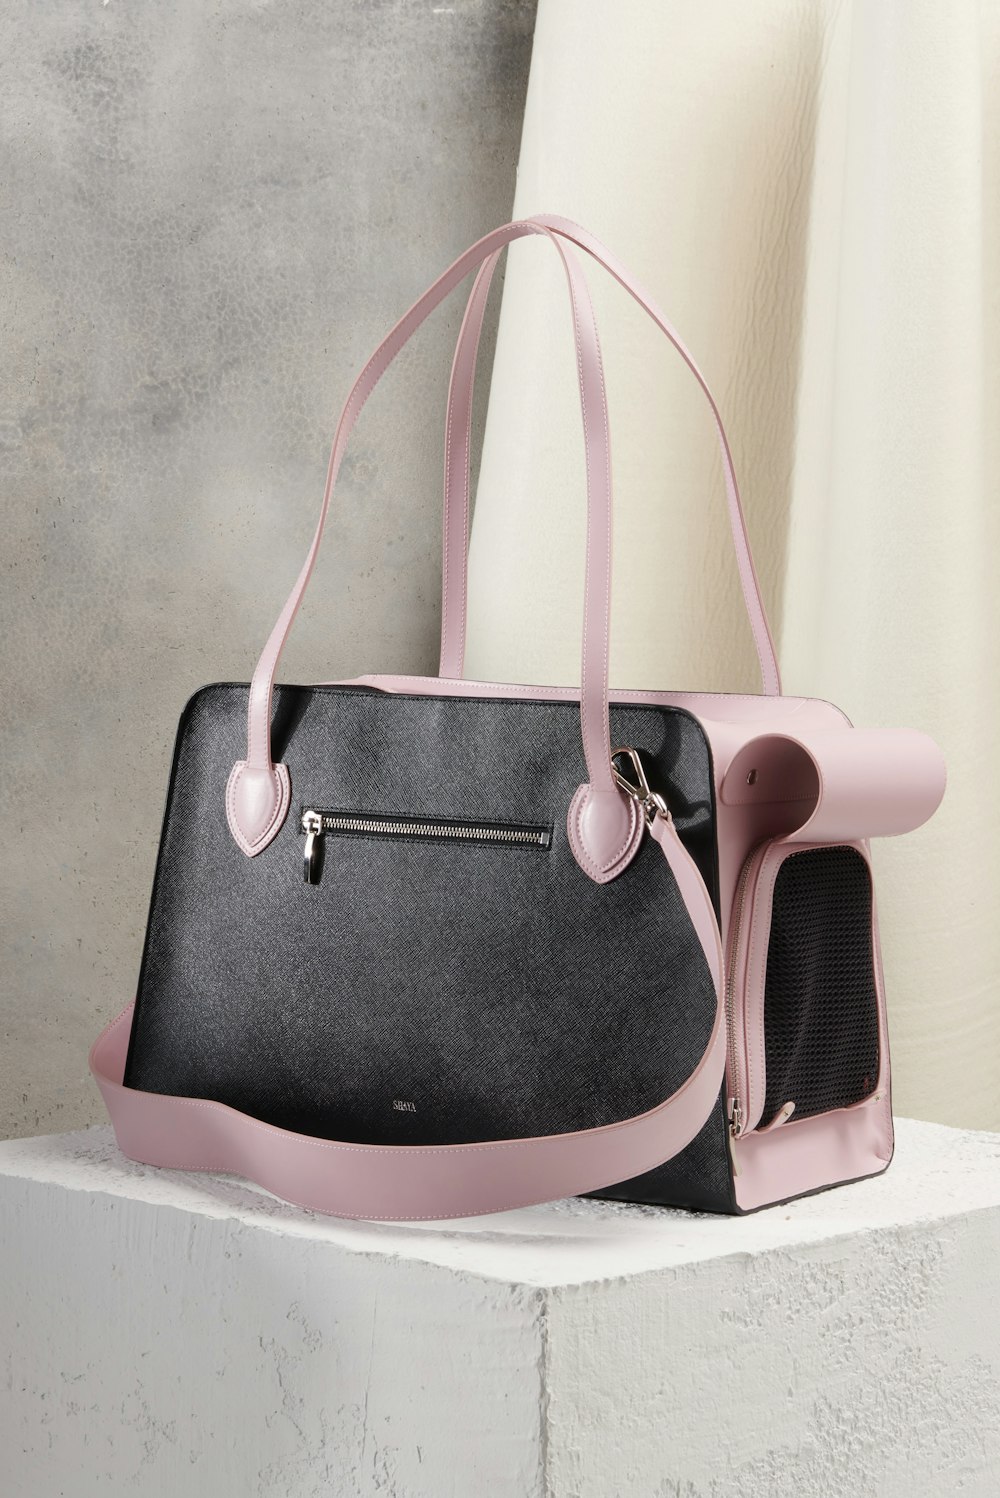 black and pink leather handbag